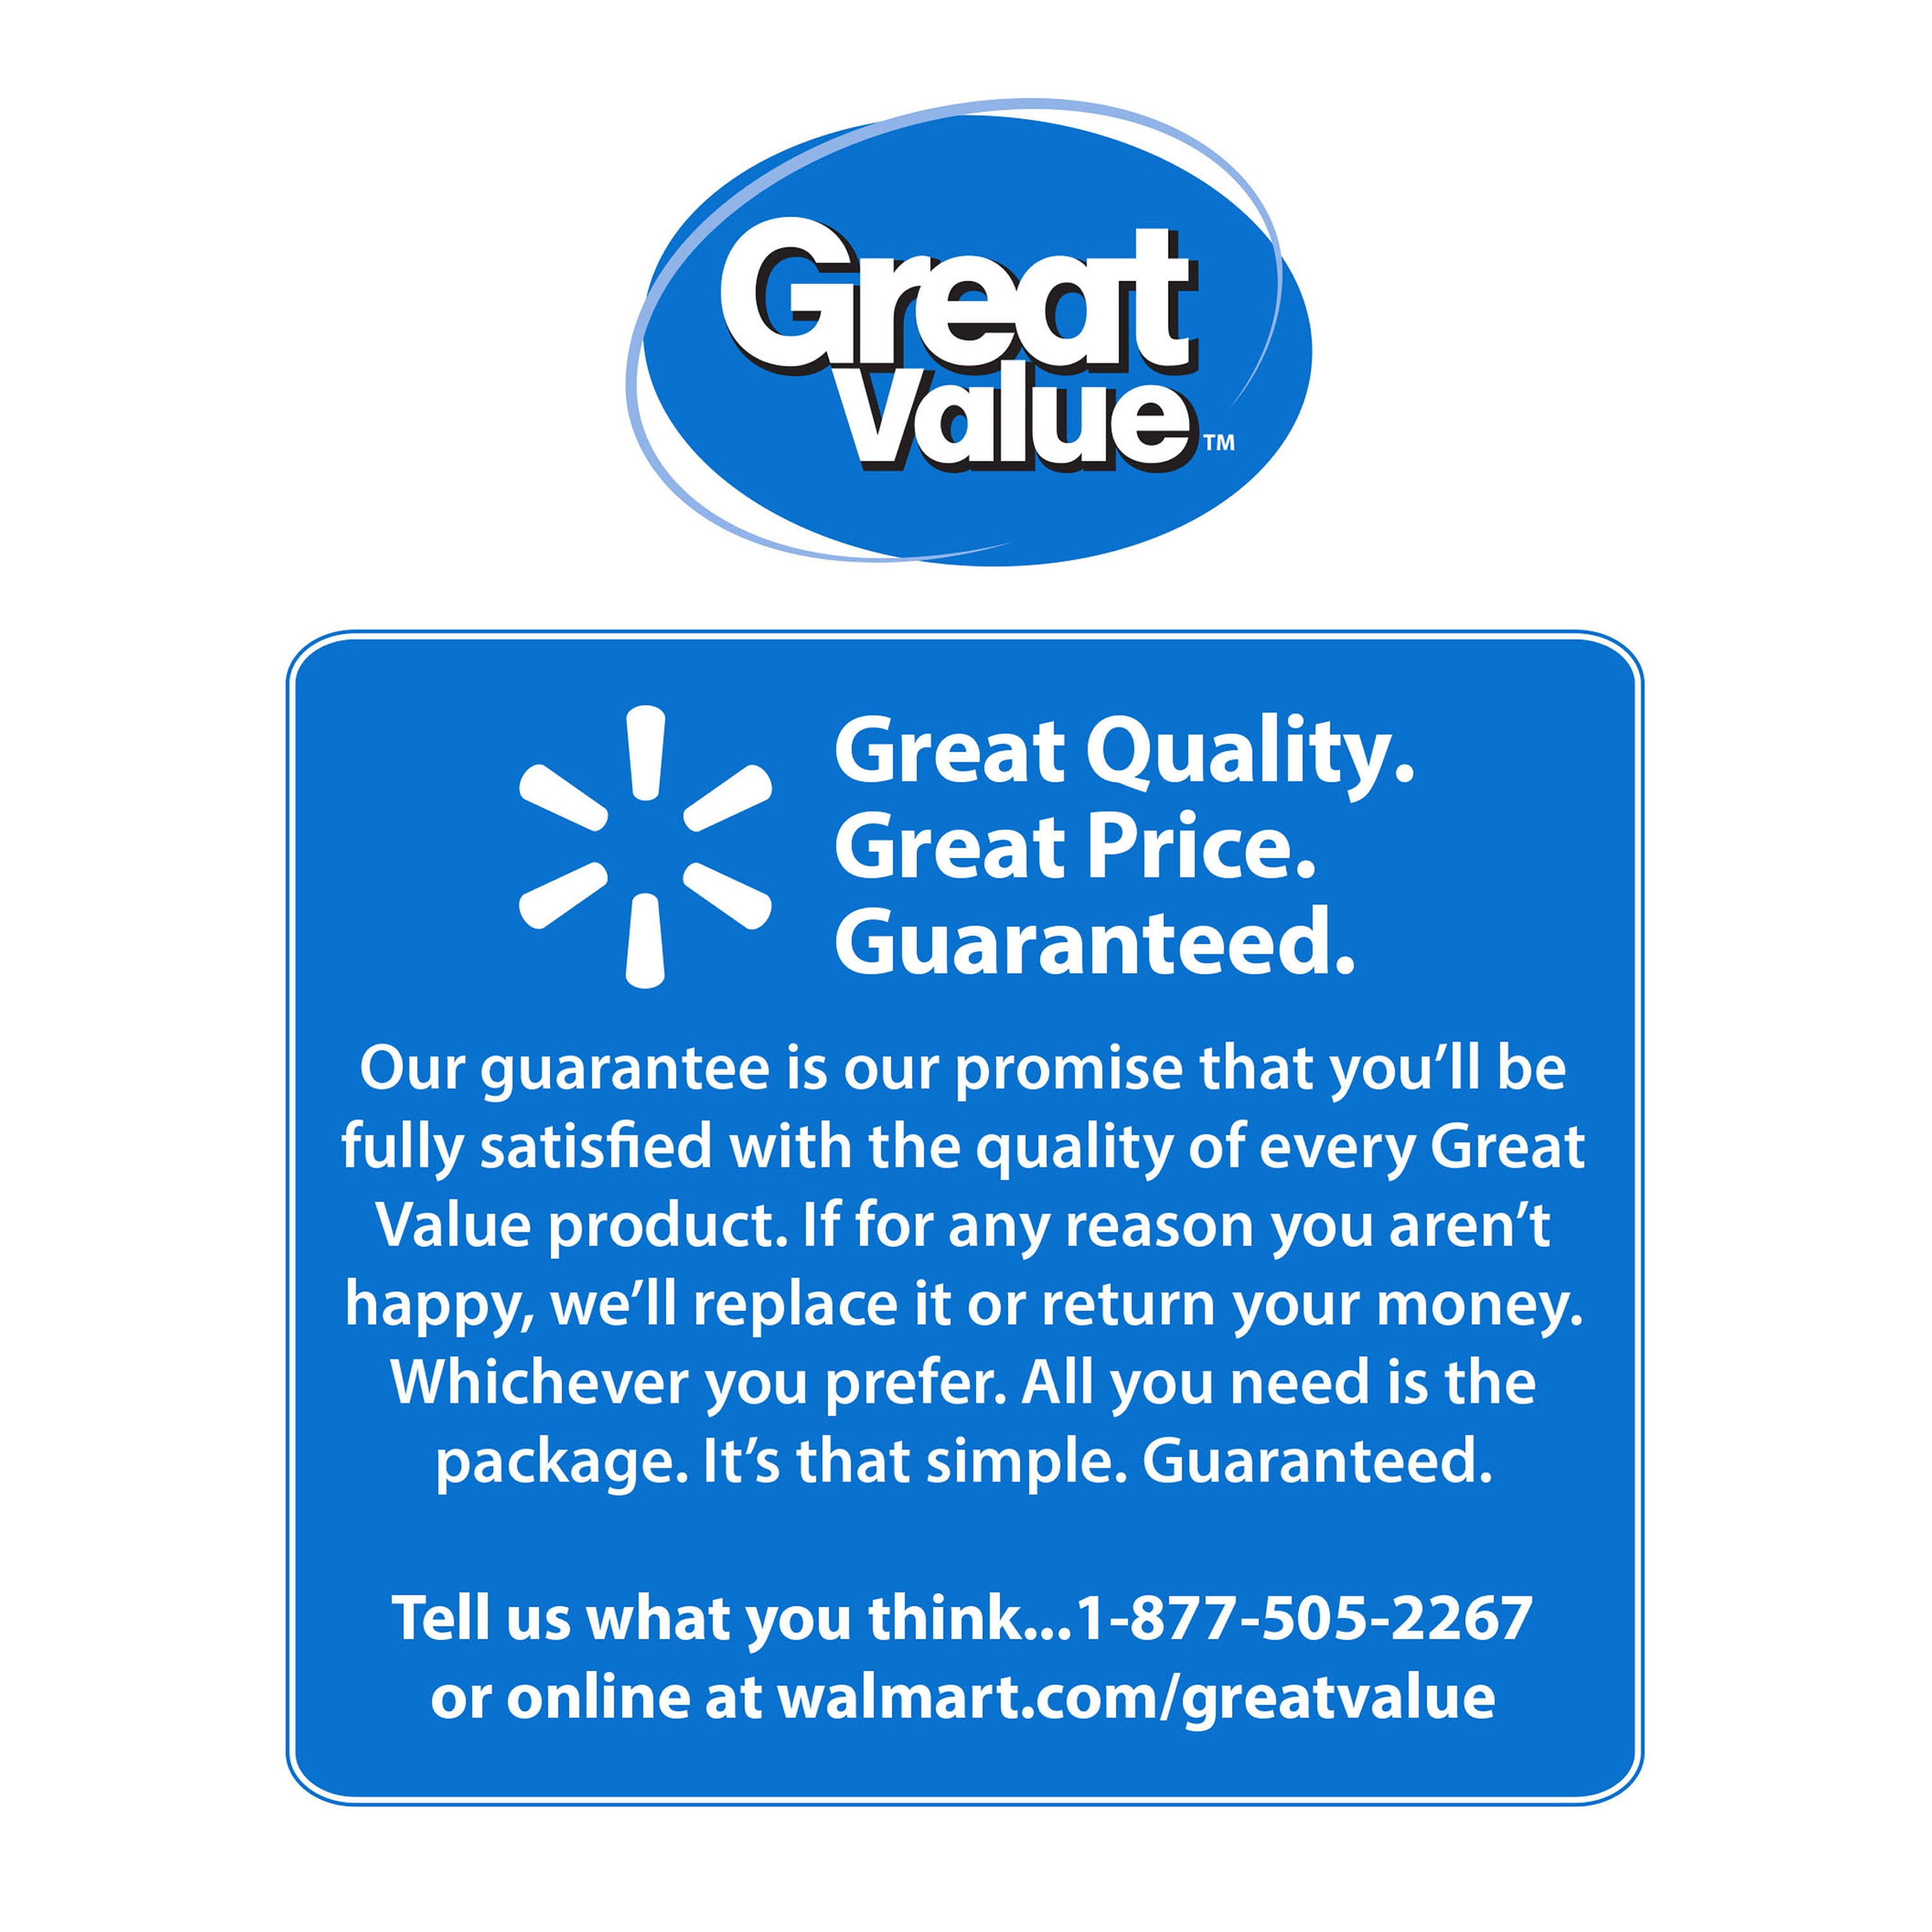 NEW* Walmart Great Value No Crust PB&J Sandwiches (Cheap